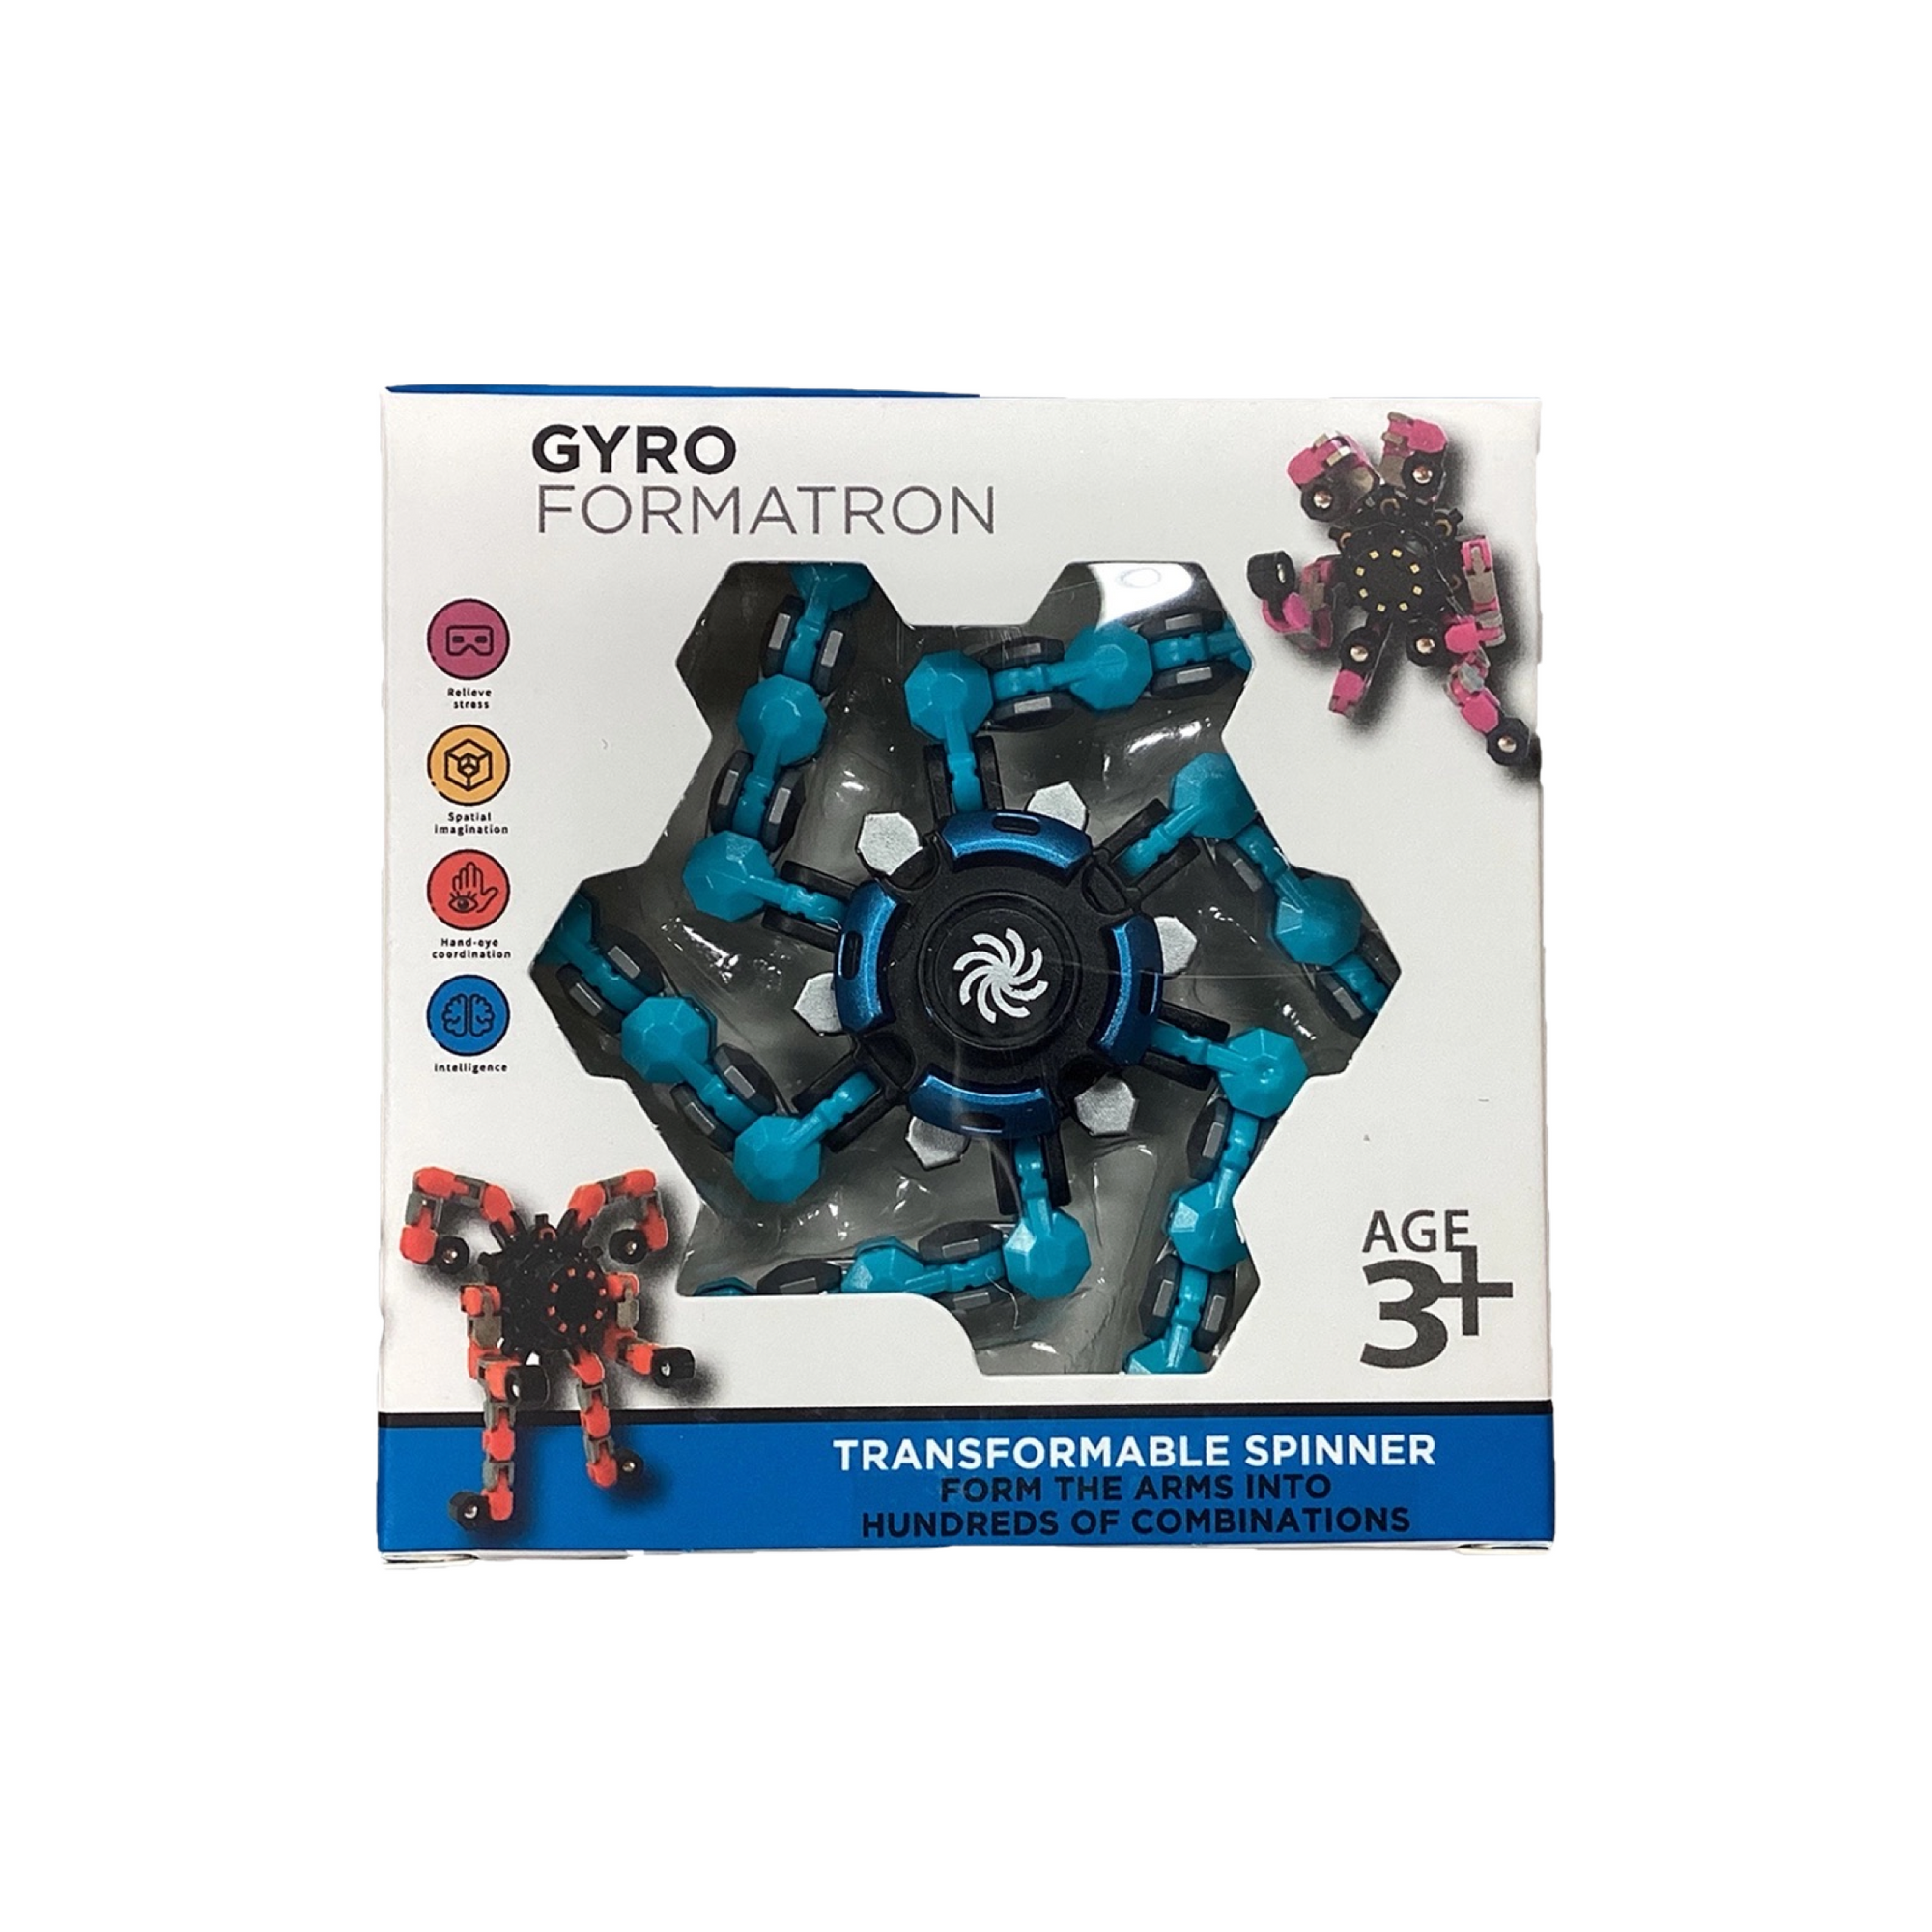 Gyro Formatron Fidget Spinner